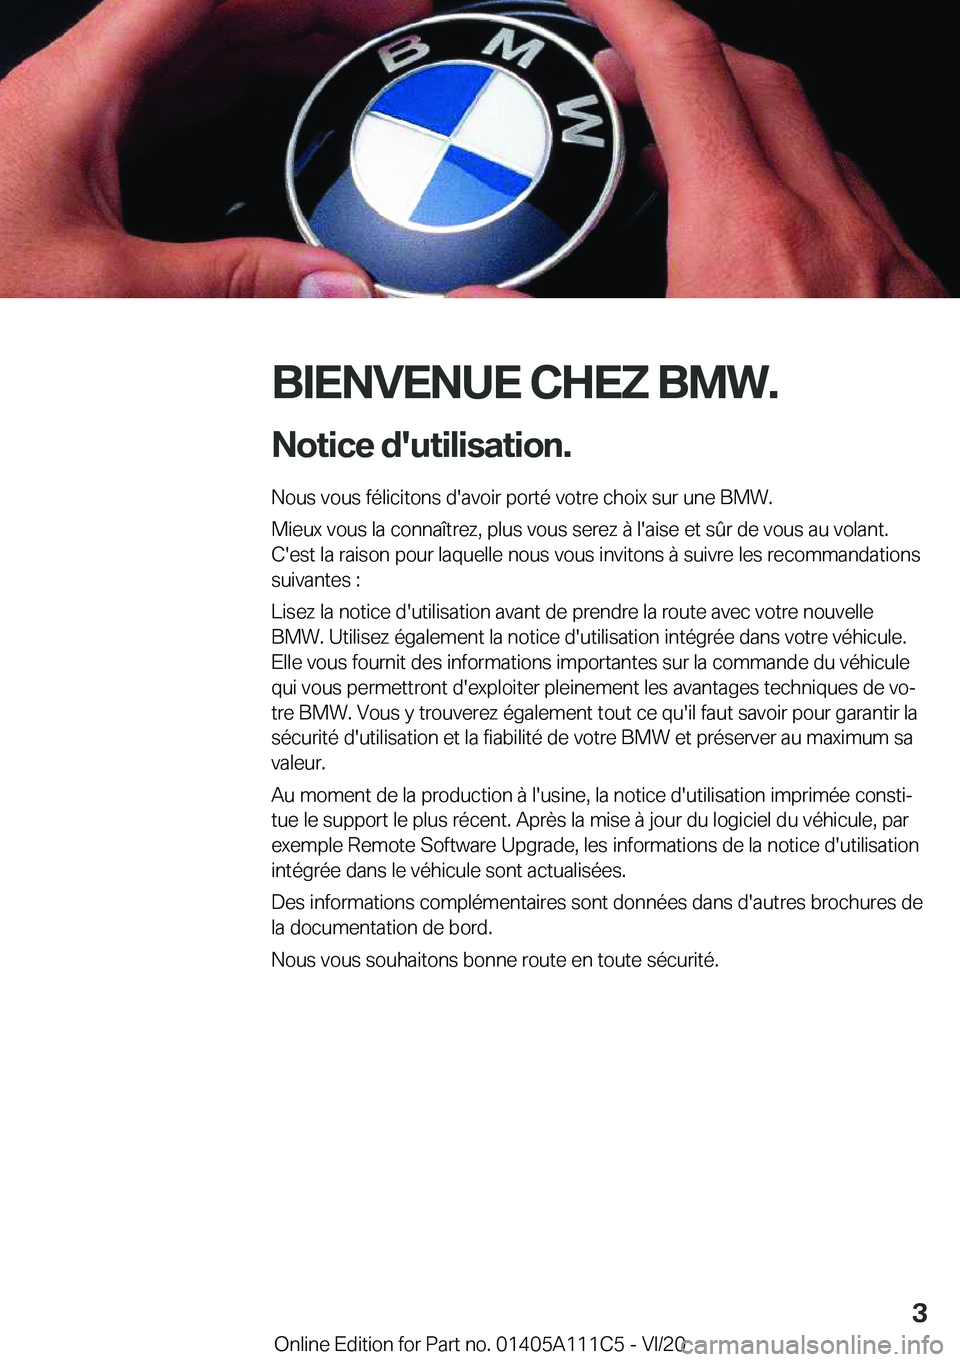 BMW 3 SERIES SEDAN PLUG-IN HYBRID 2021  Notices Demploi (in French) �B�I�E�N�V�E�N�U�E��C�H�E�Z��B�M�W�.�N�o�t�i�c�e��d�'�u�t�i�l�i�s�a�t�i�o�n�.
�N�o�u�s��v�o�u�s��f�é�l�i�c�i�t�o�n�s��d�'�a�v�o�i�r��p�o�r�t�é��v�o�t�r�e��c�h�o�i�x��s�u�r��u�n�e�